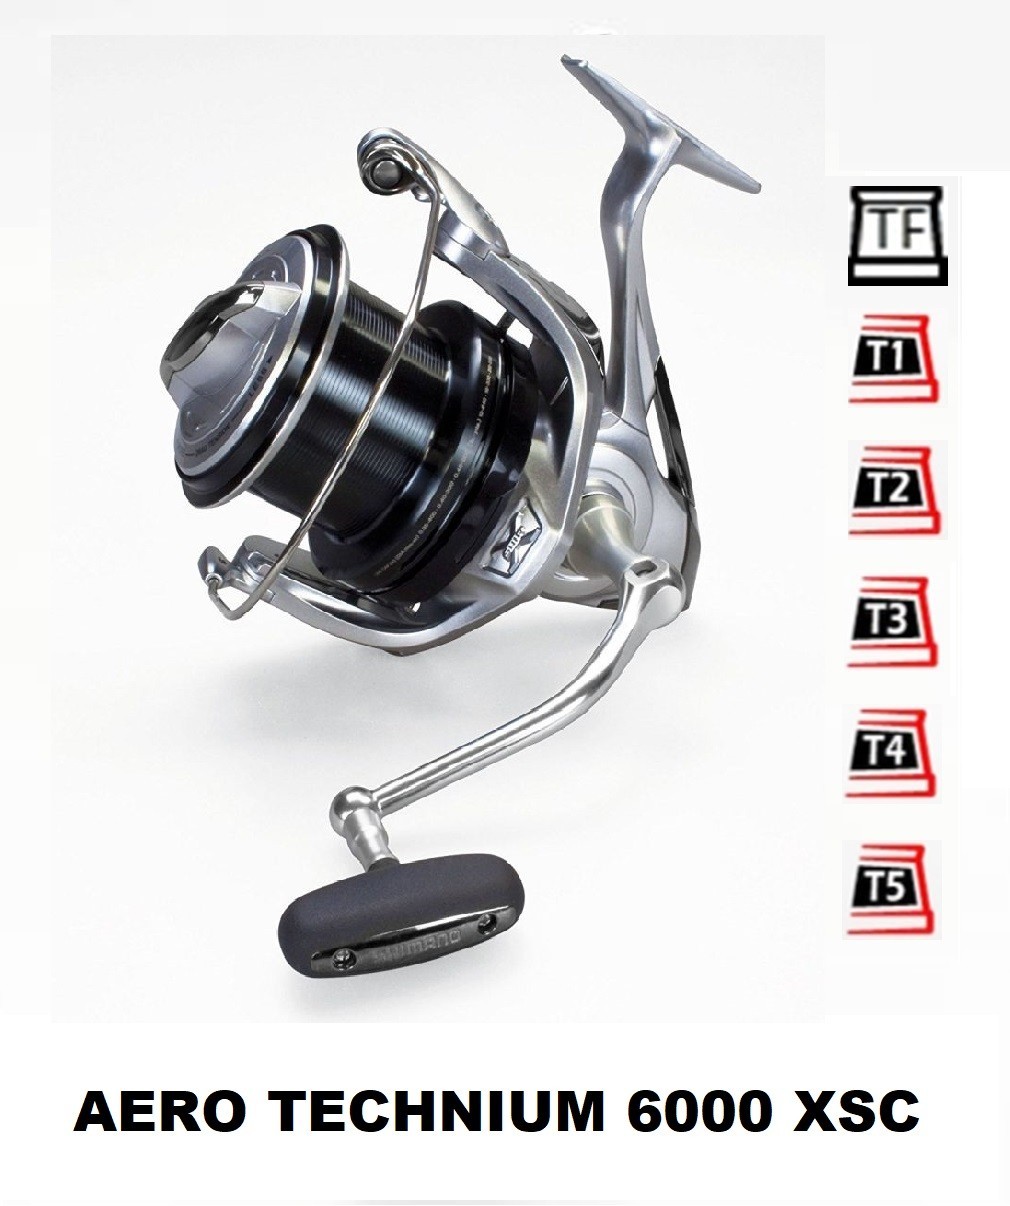 shimano aero technium 6000 xsc